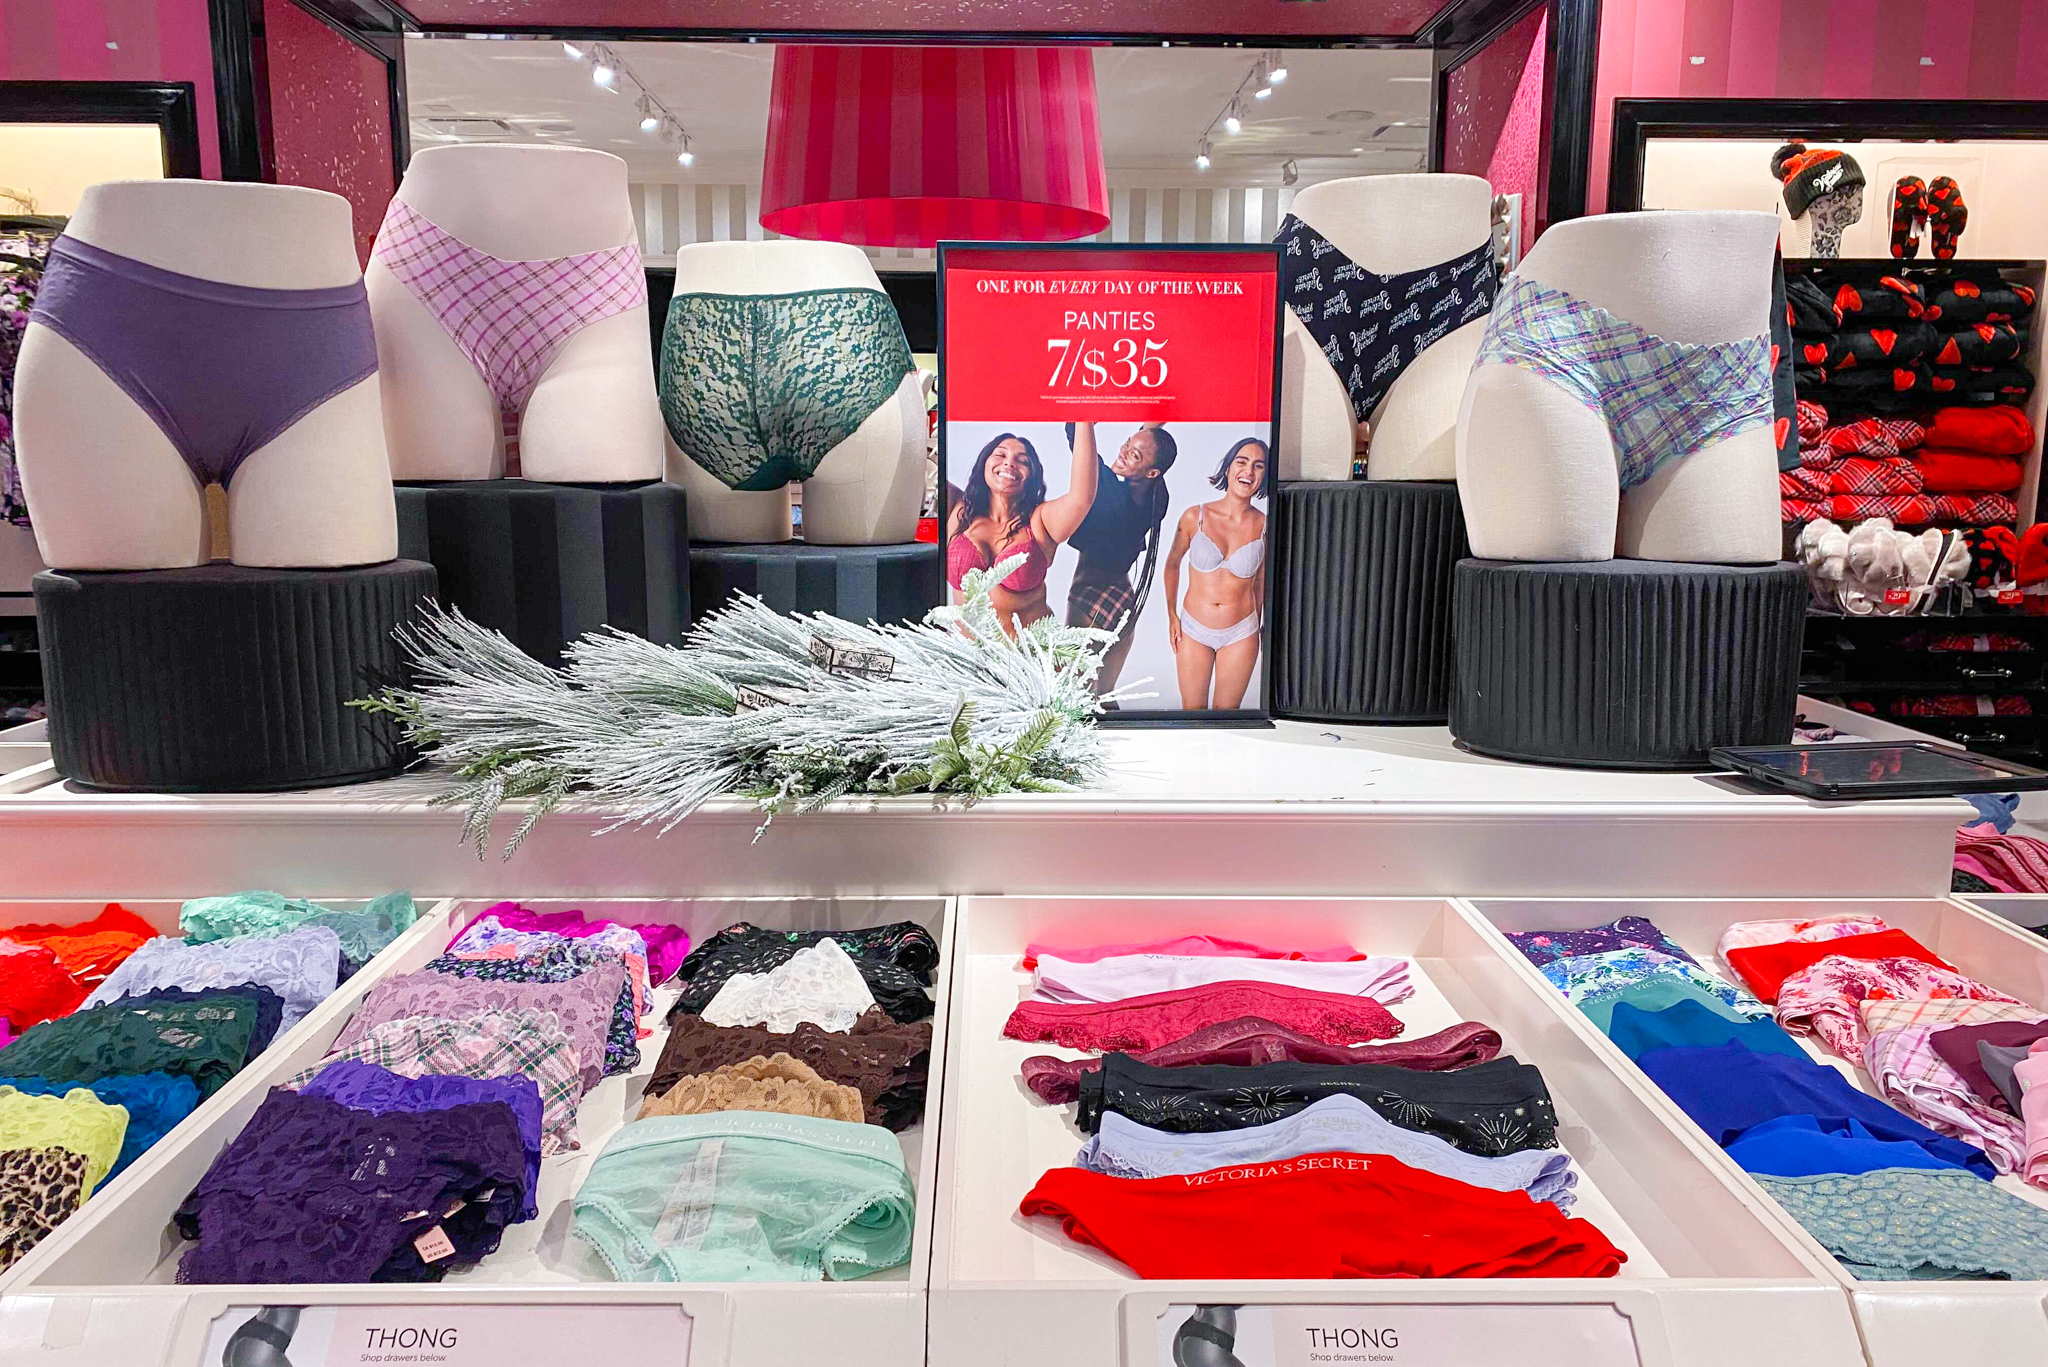 Victoria's Secret Semi Annual Sale Expected to Return June 2024